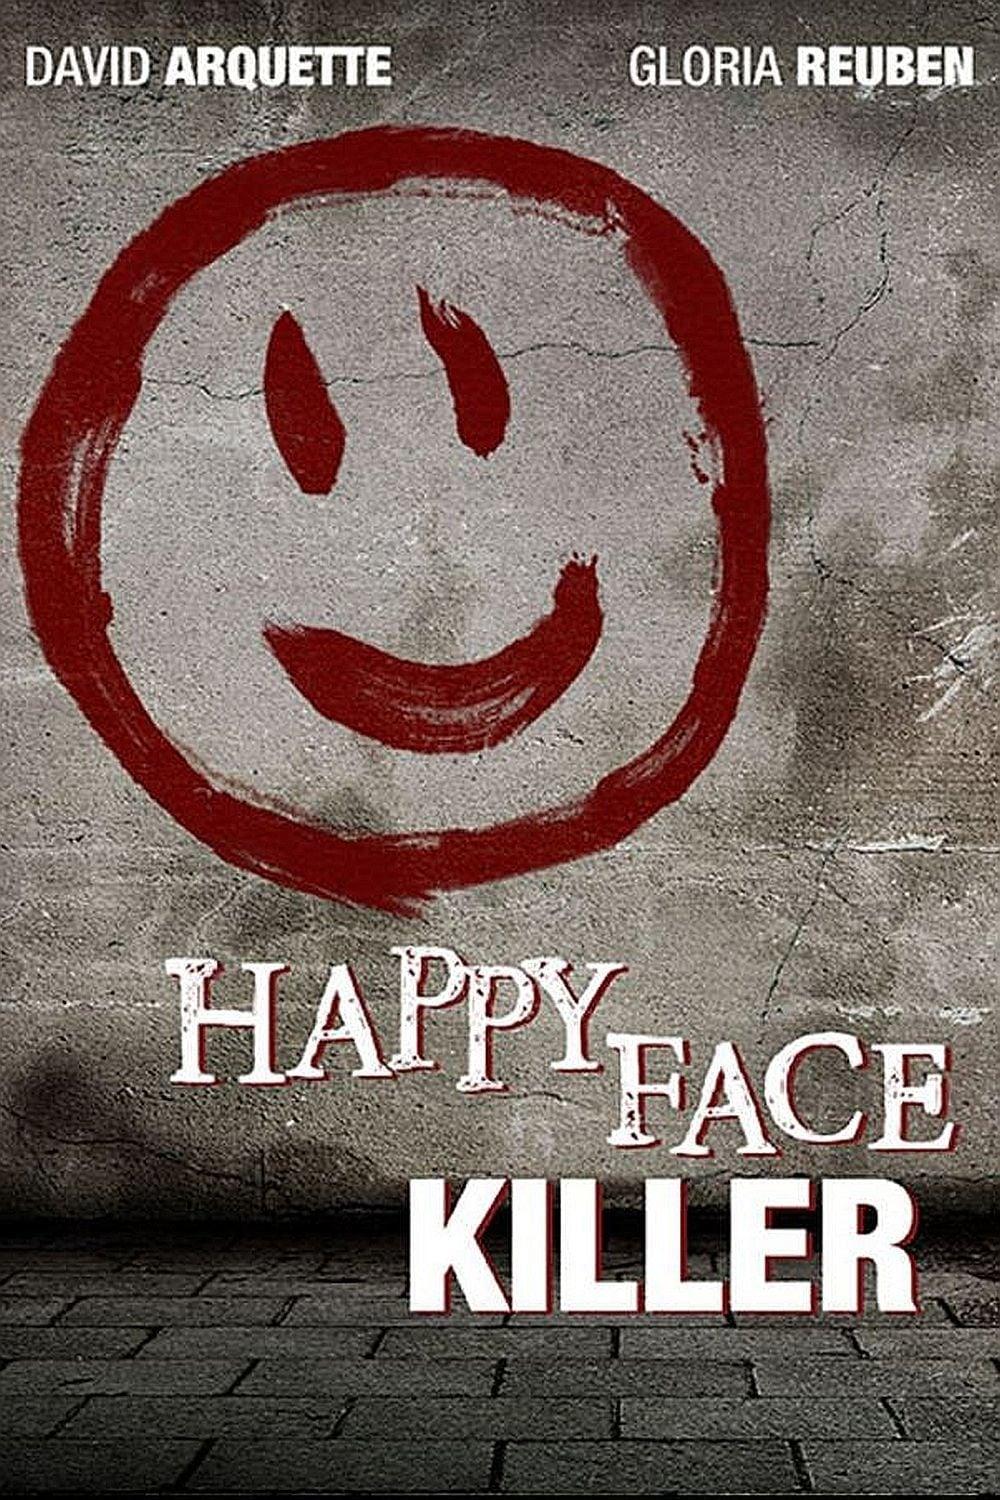 Happy Face Killer poster